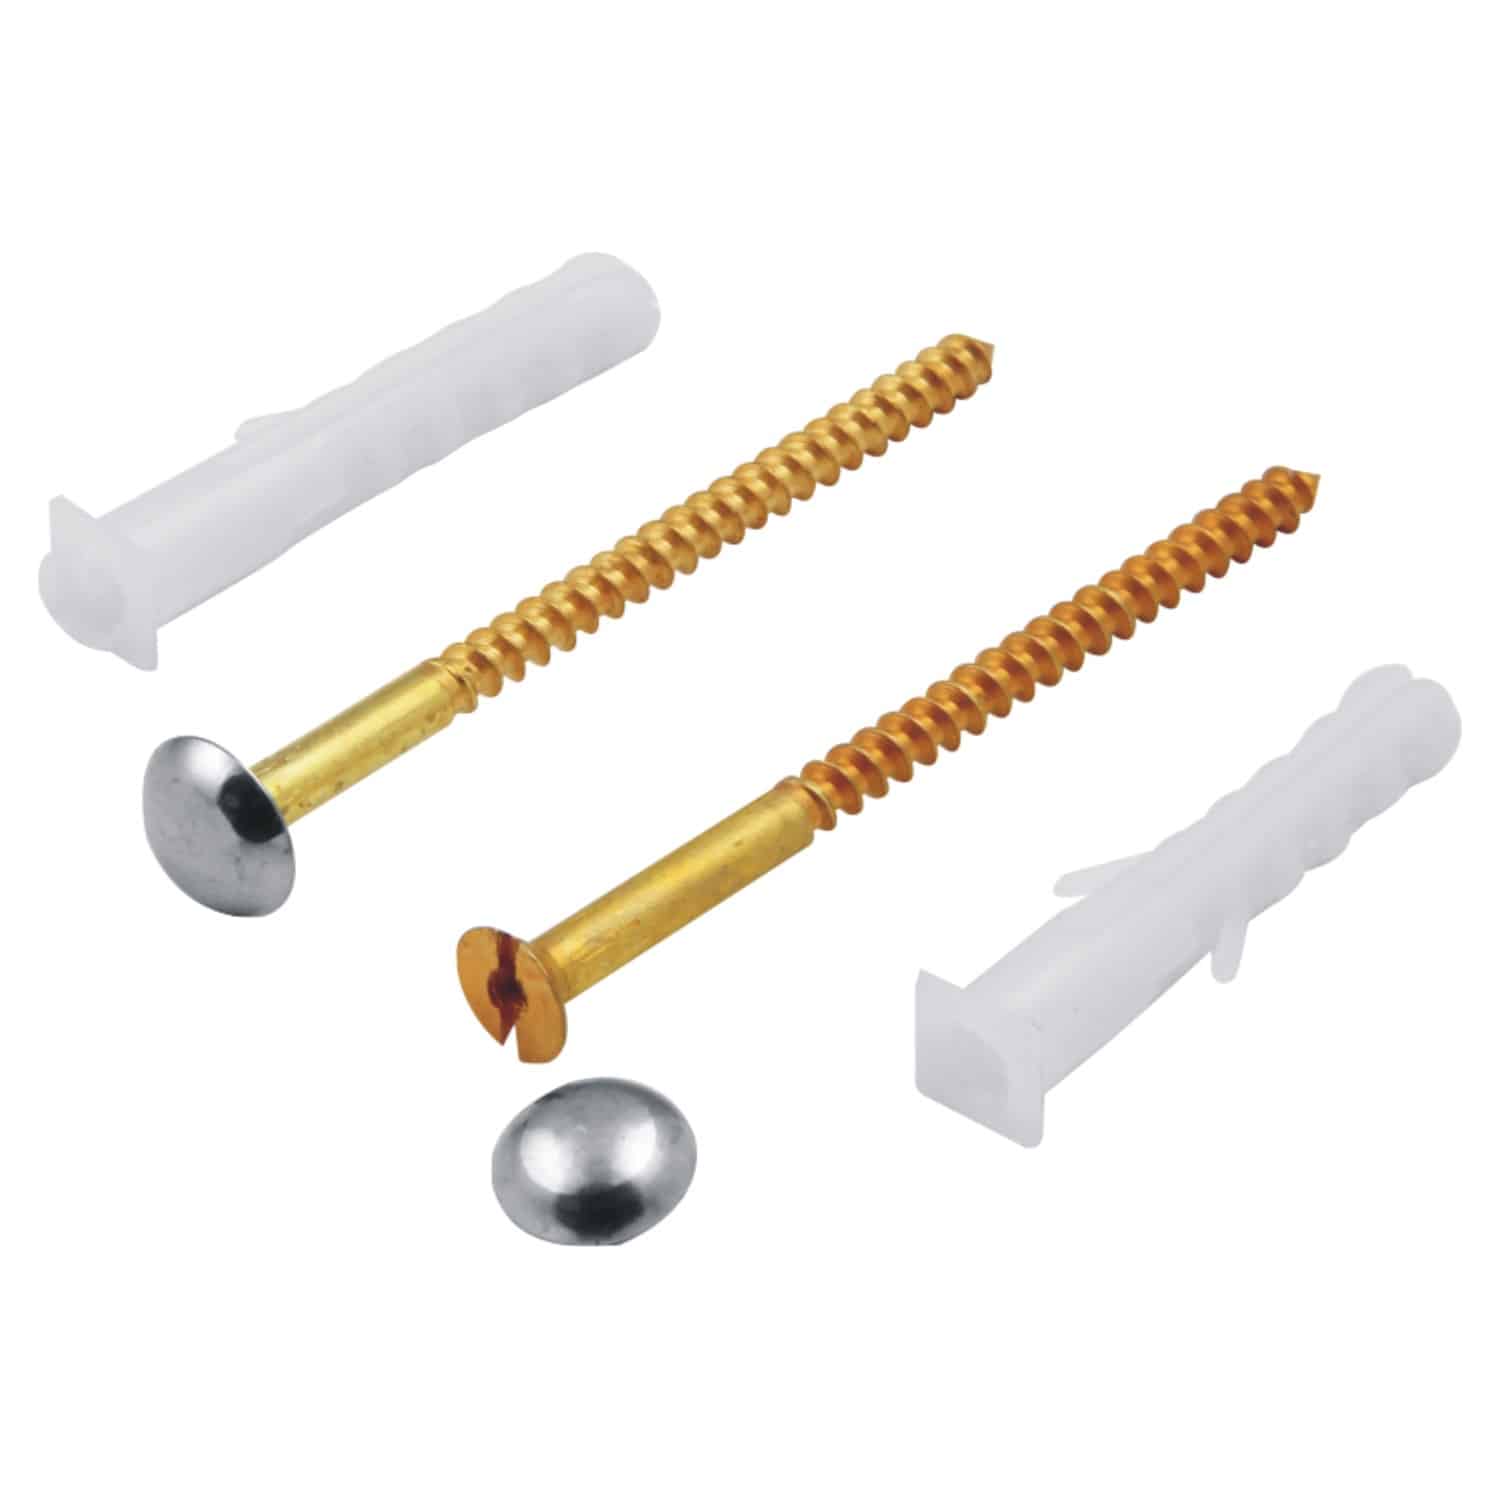 Goeka brass screw, nuts & rack bolt 